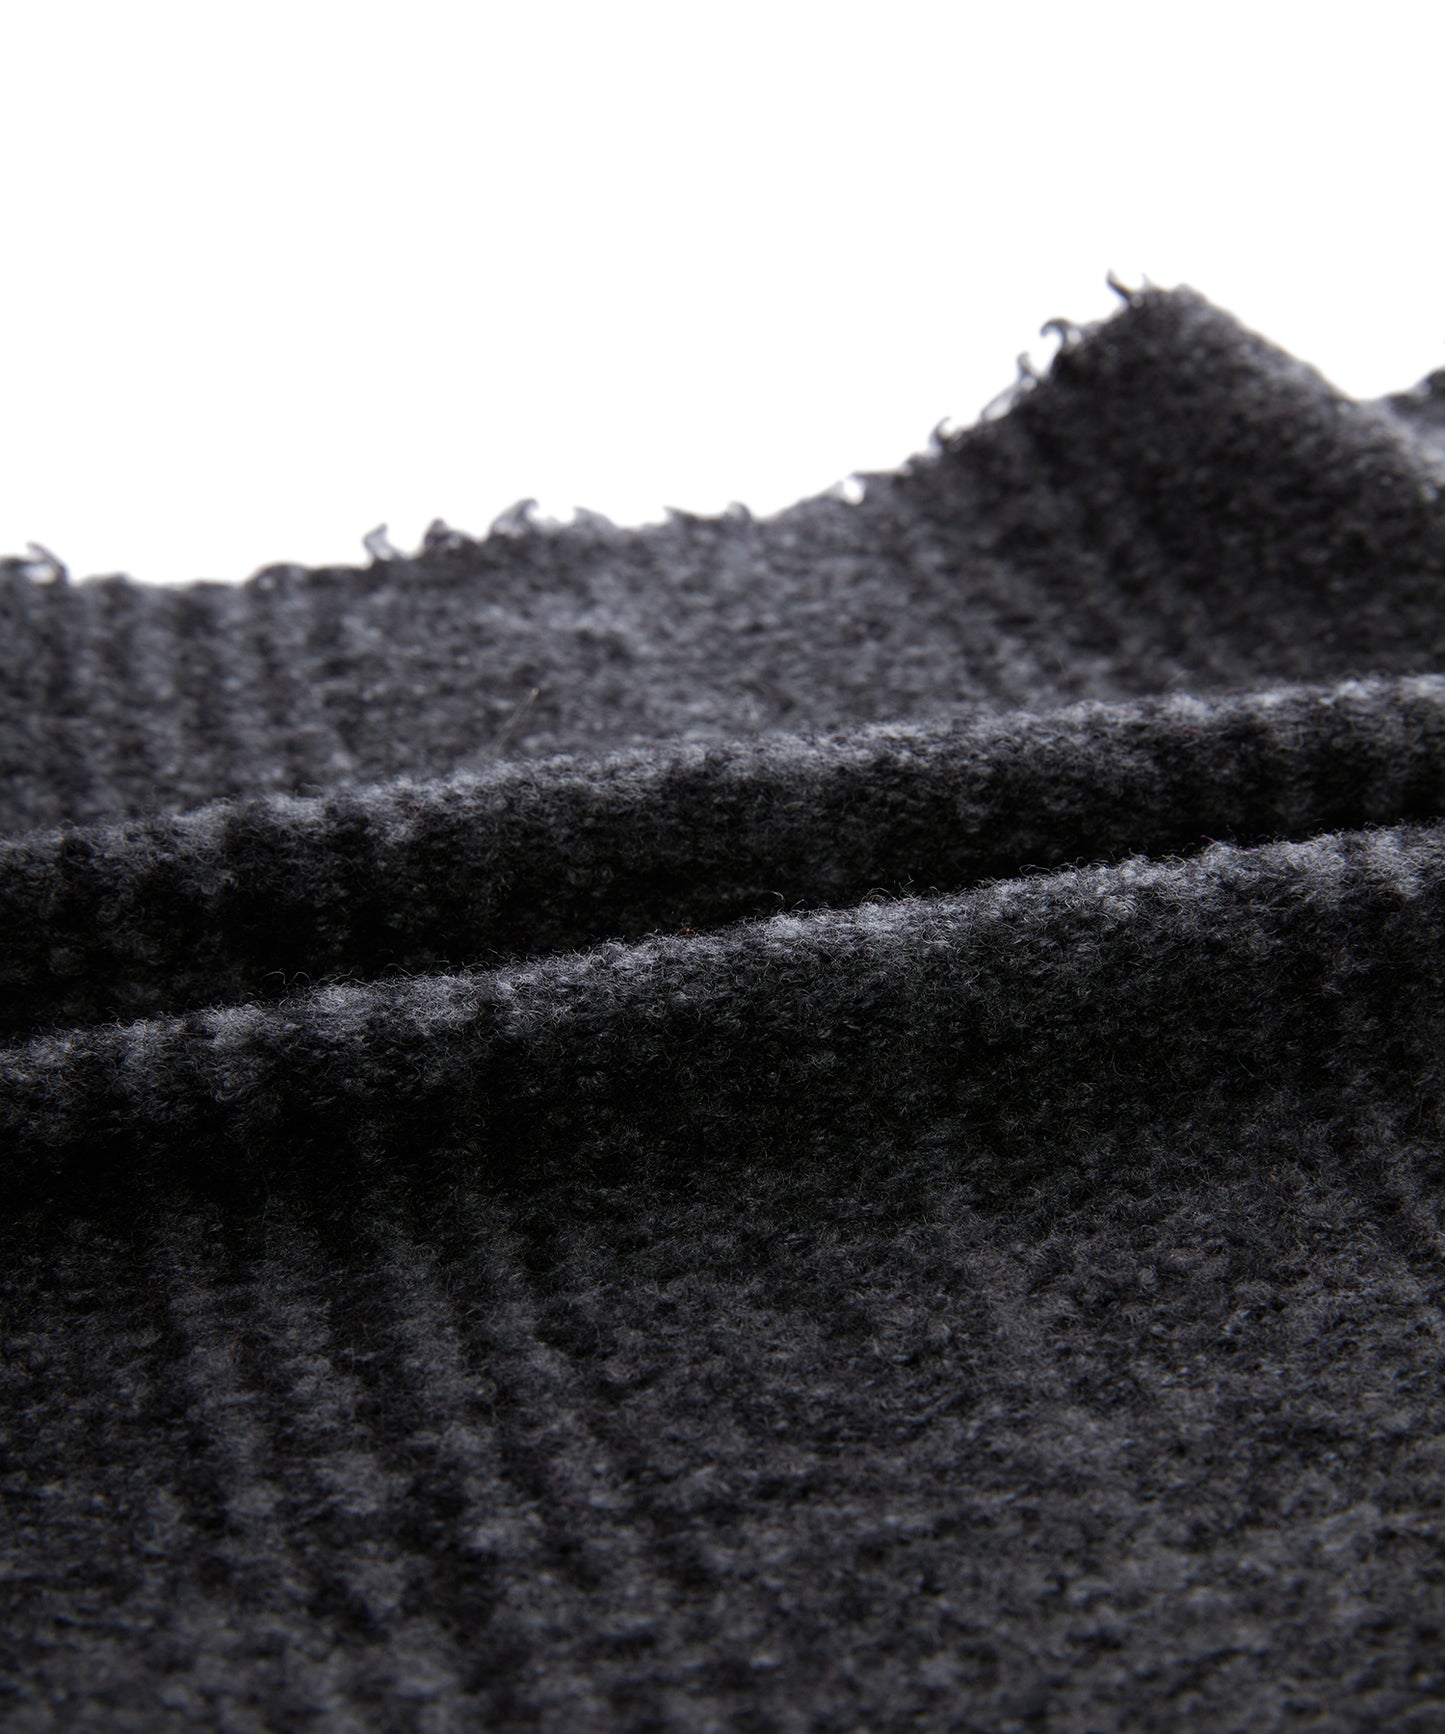 3D Plaid Wool Scarf